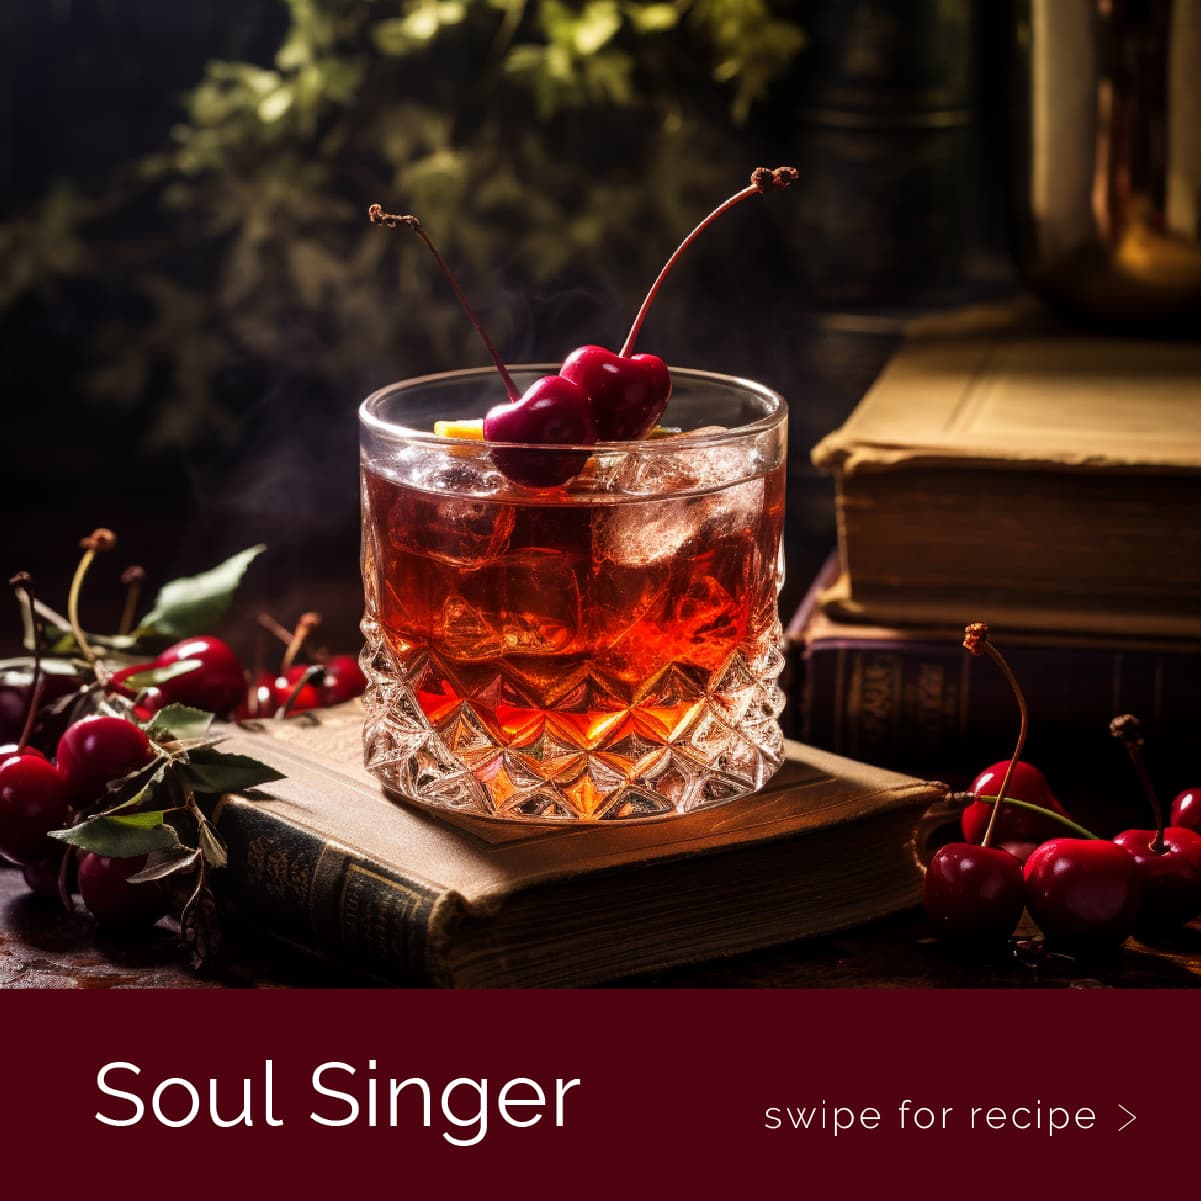 A Soul Singer cocktail